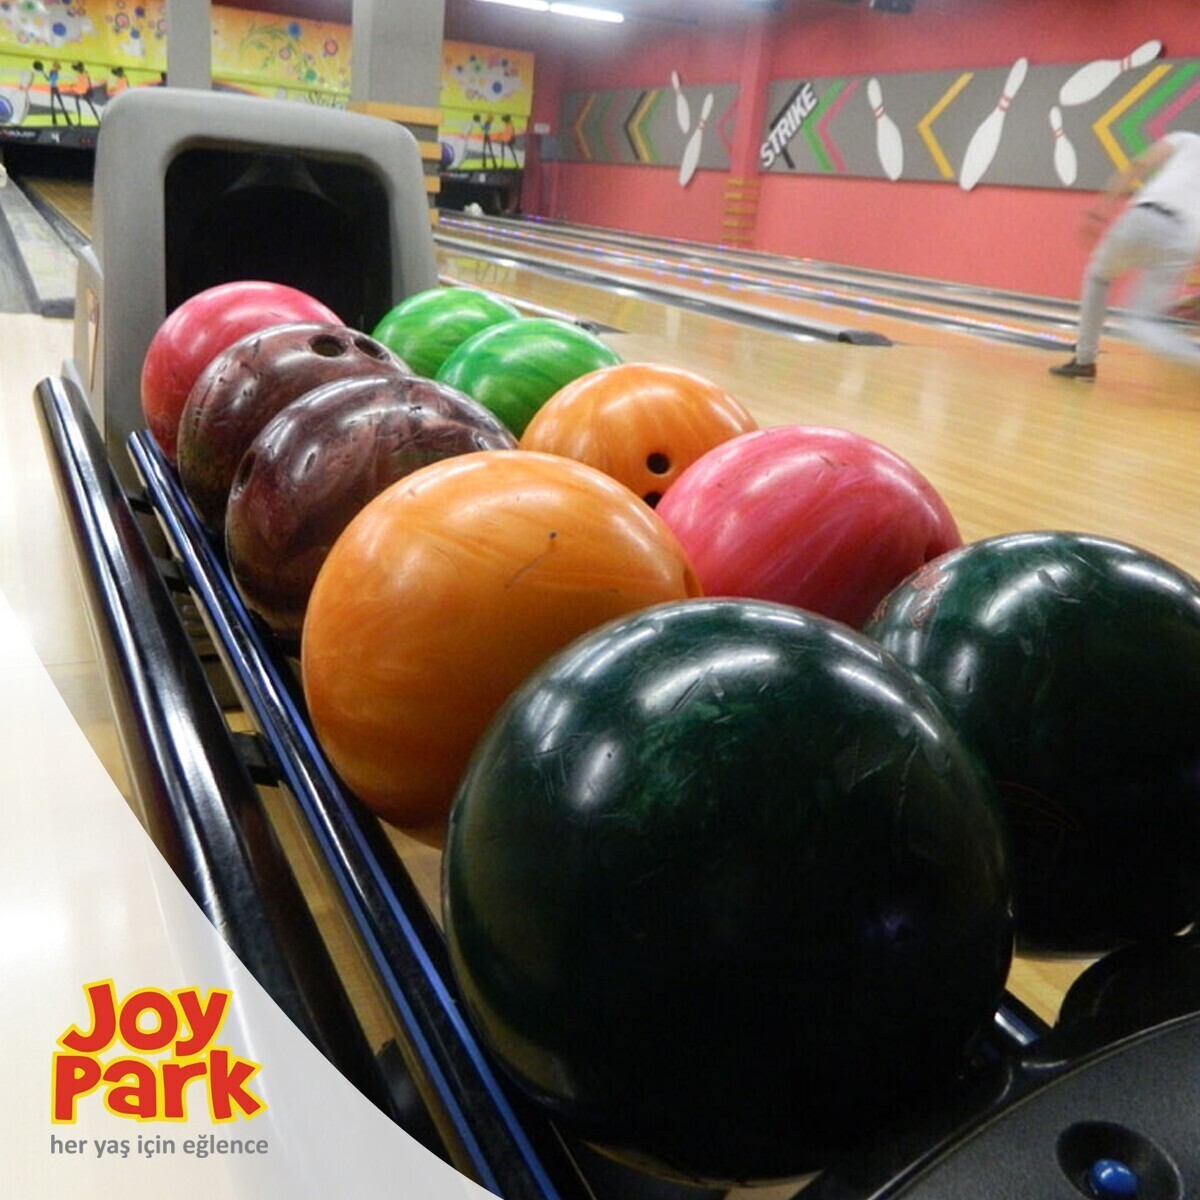 JoyPark Axis AVM Bowling Oyun Biletleri